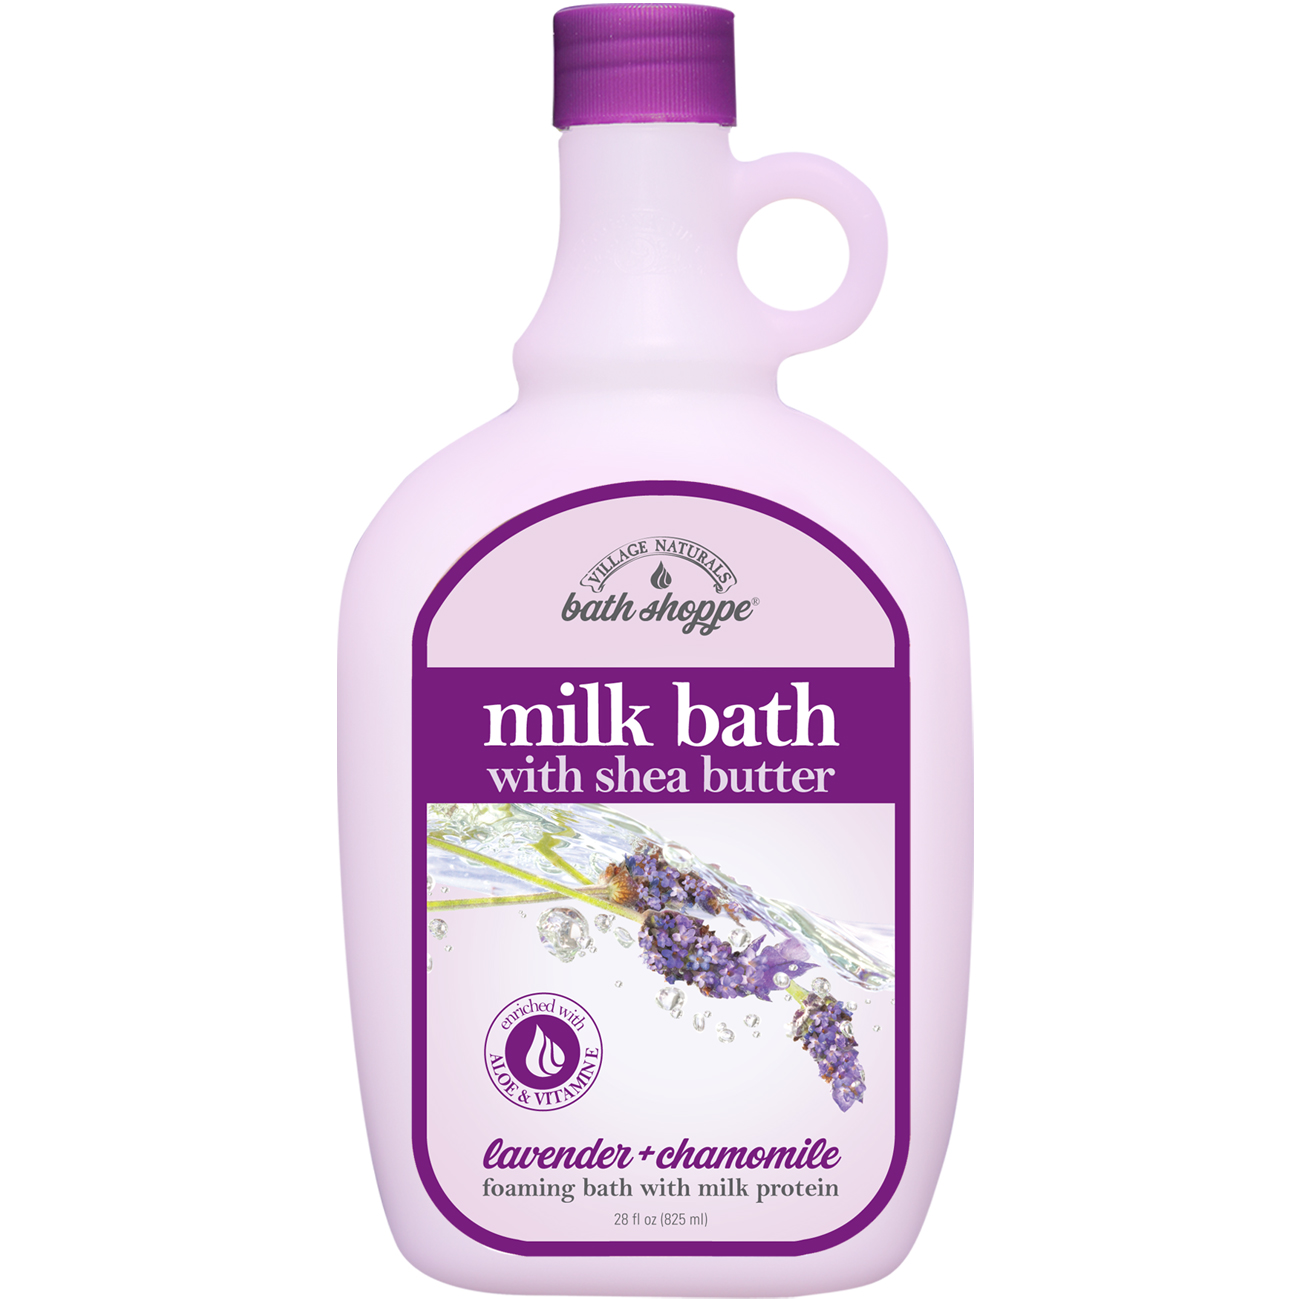 Villiage Naturals Therapy Lavender and Chamomile Body Soak with Shea Butter 28 fl oz (825 ml)